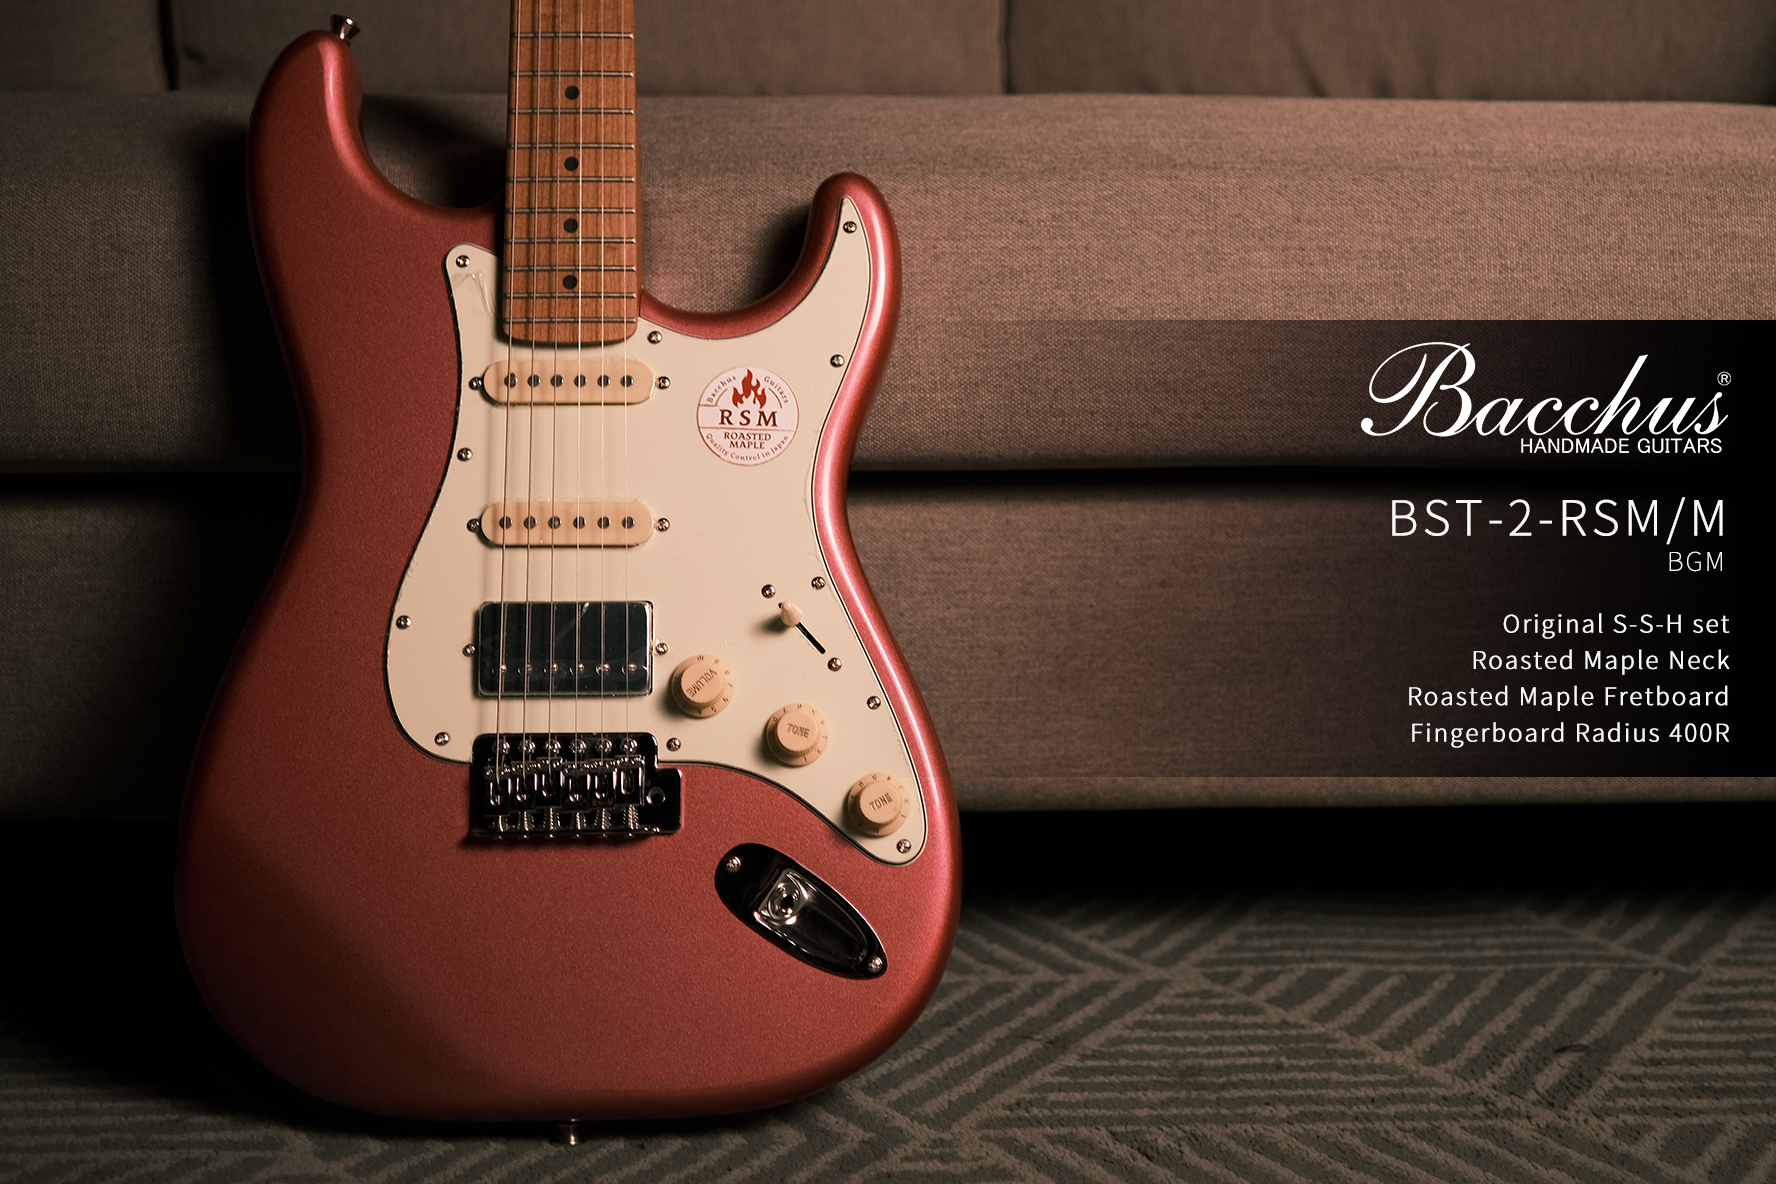 BACCHUS BST-2-RSM/M 烤楓系列電吉他硬地搖滾新手入門款